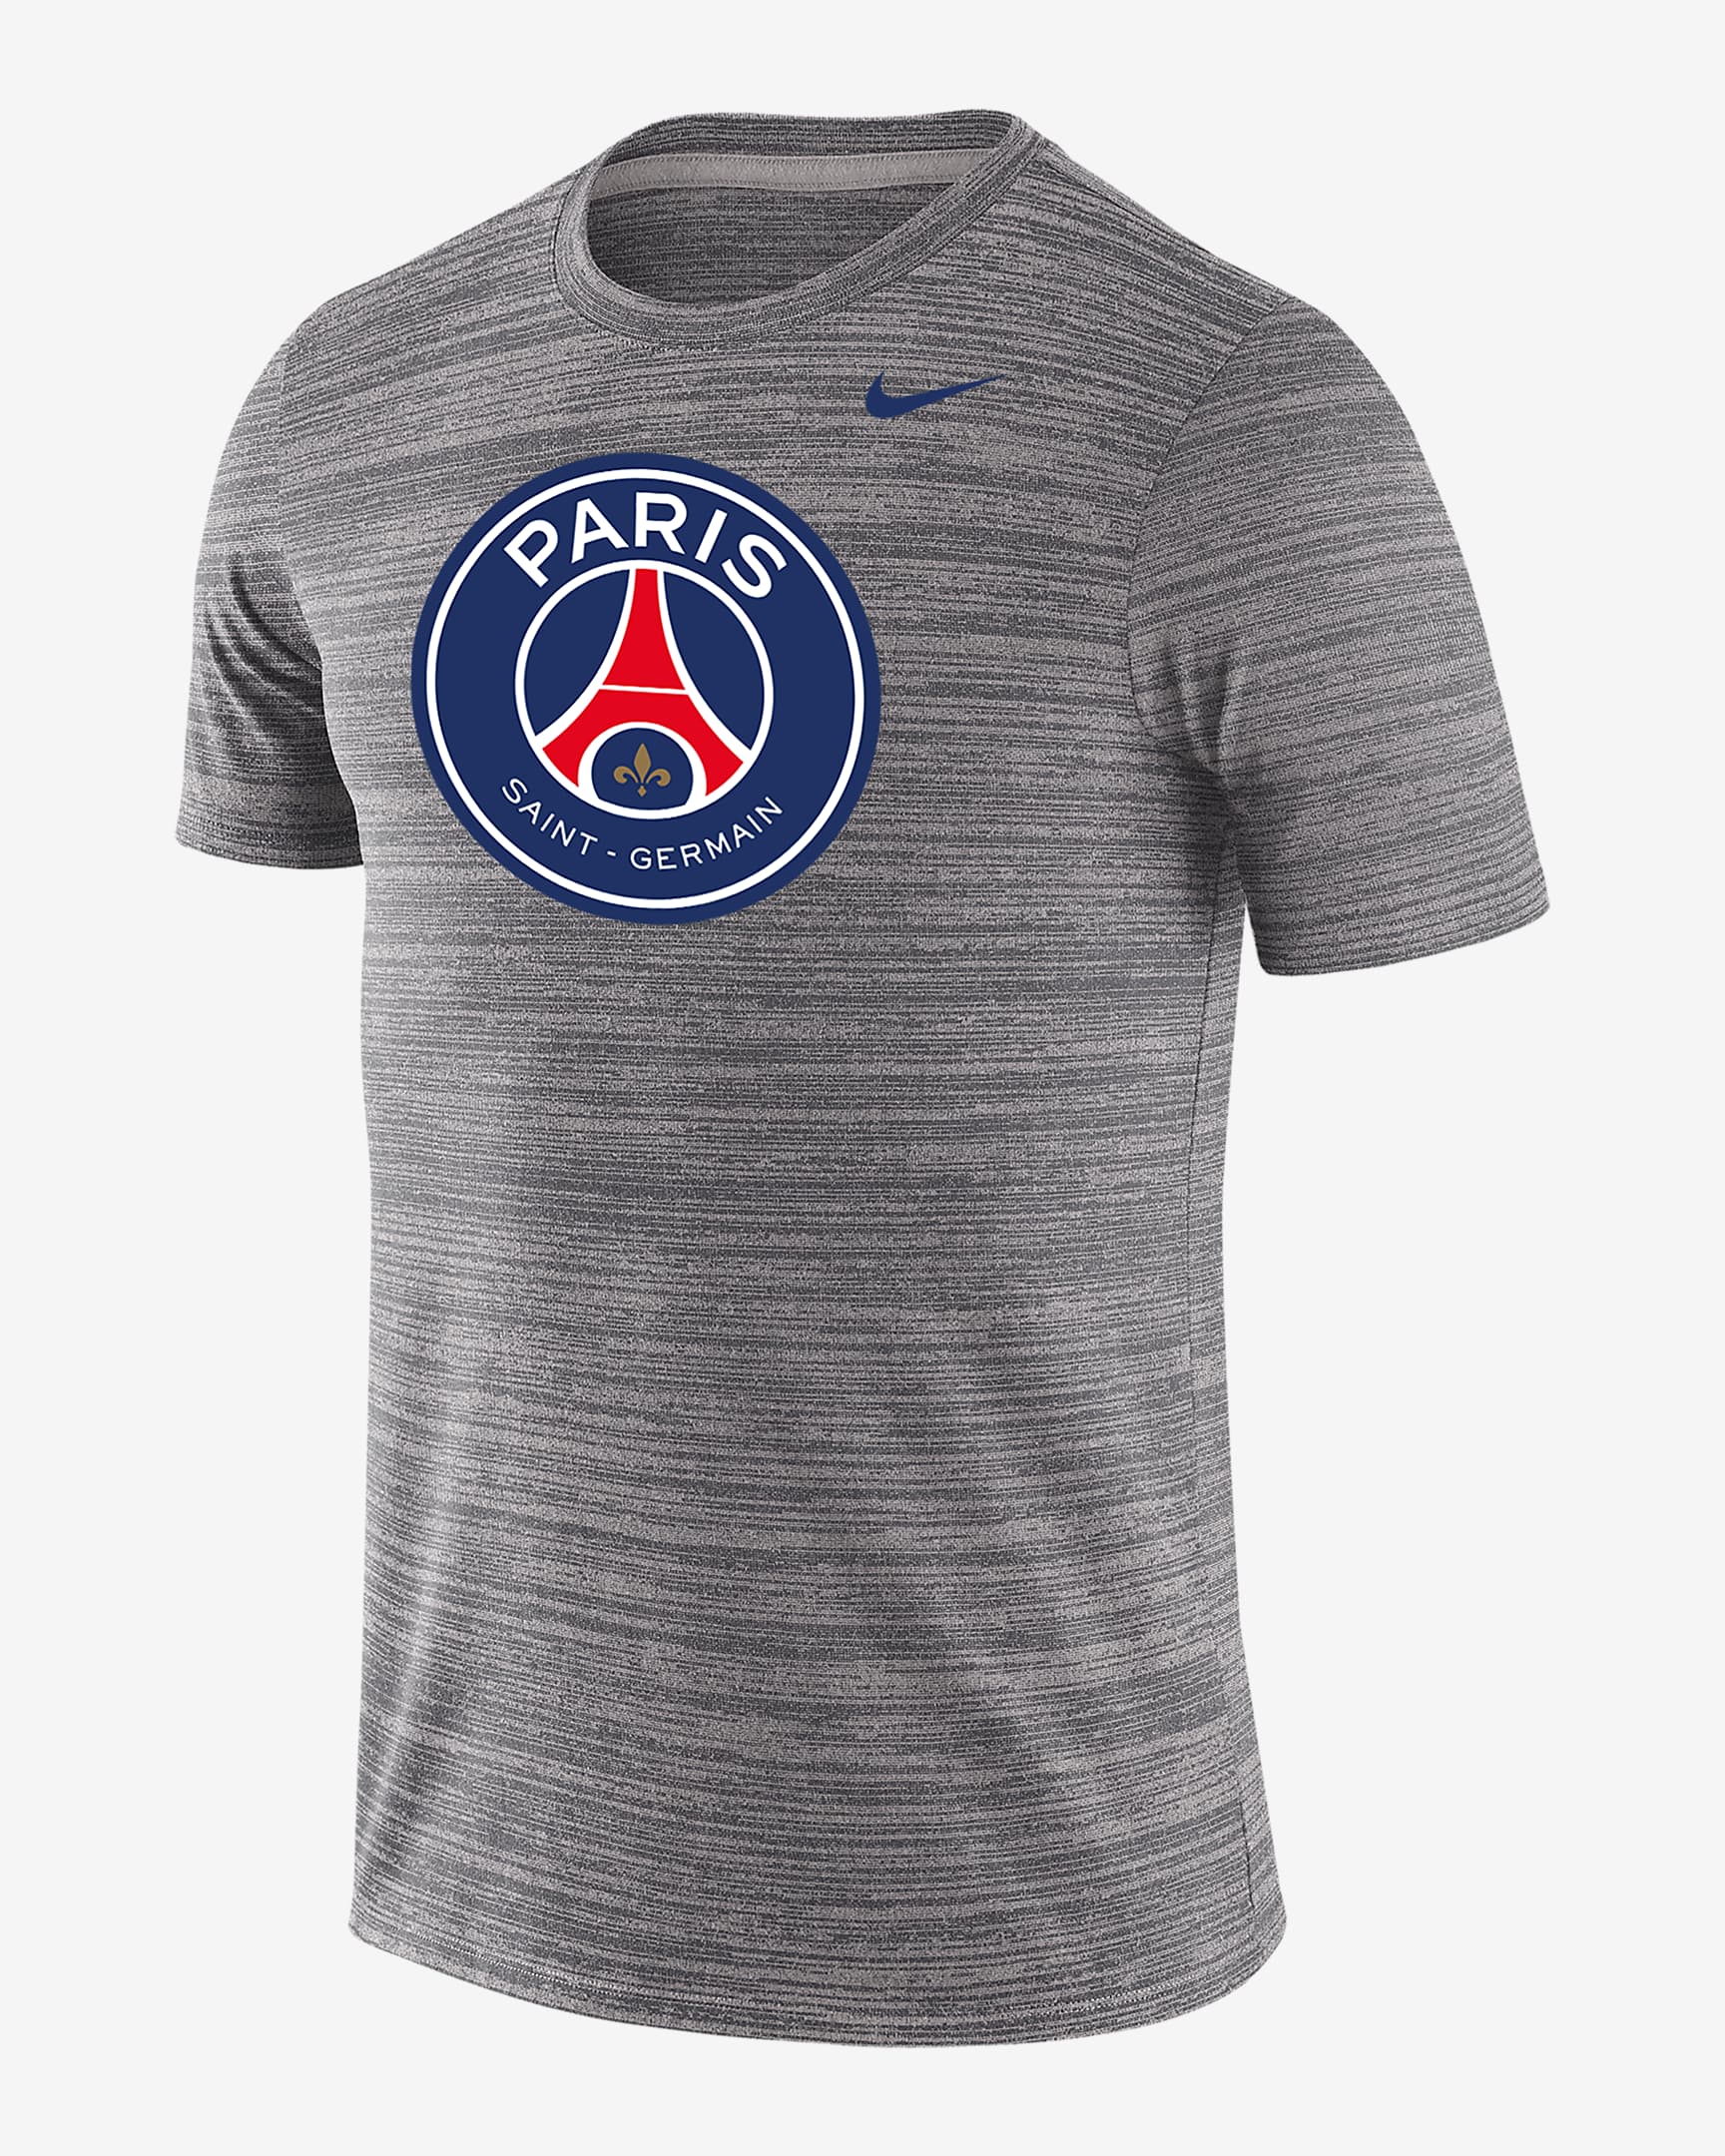 Paris Saint-Germain Velocity Legend Men's T-Shirt. Nike.com